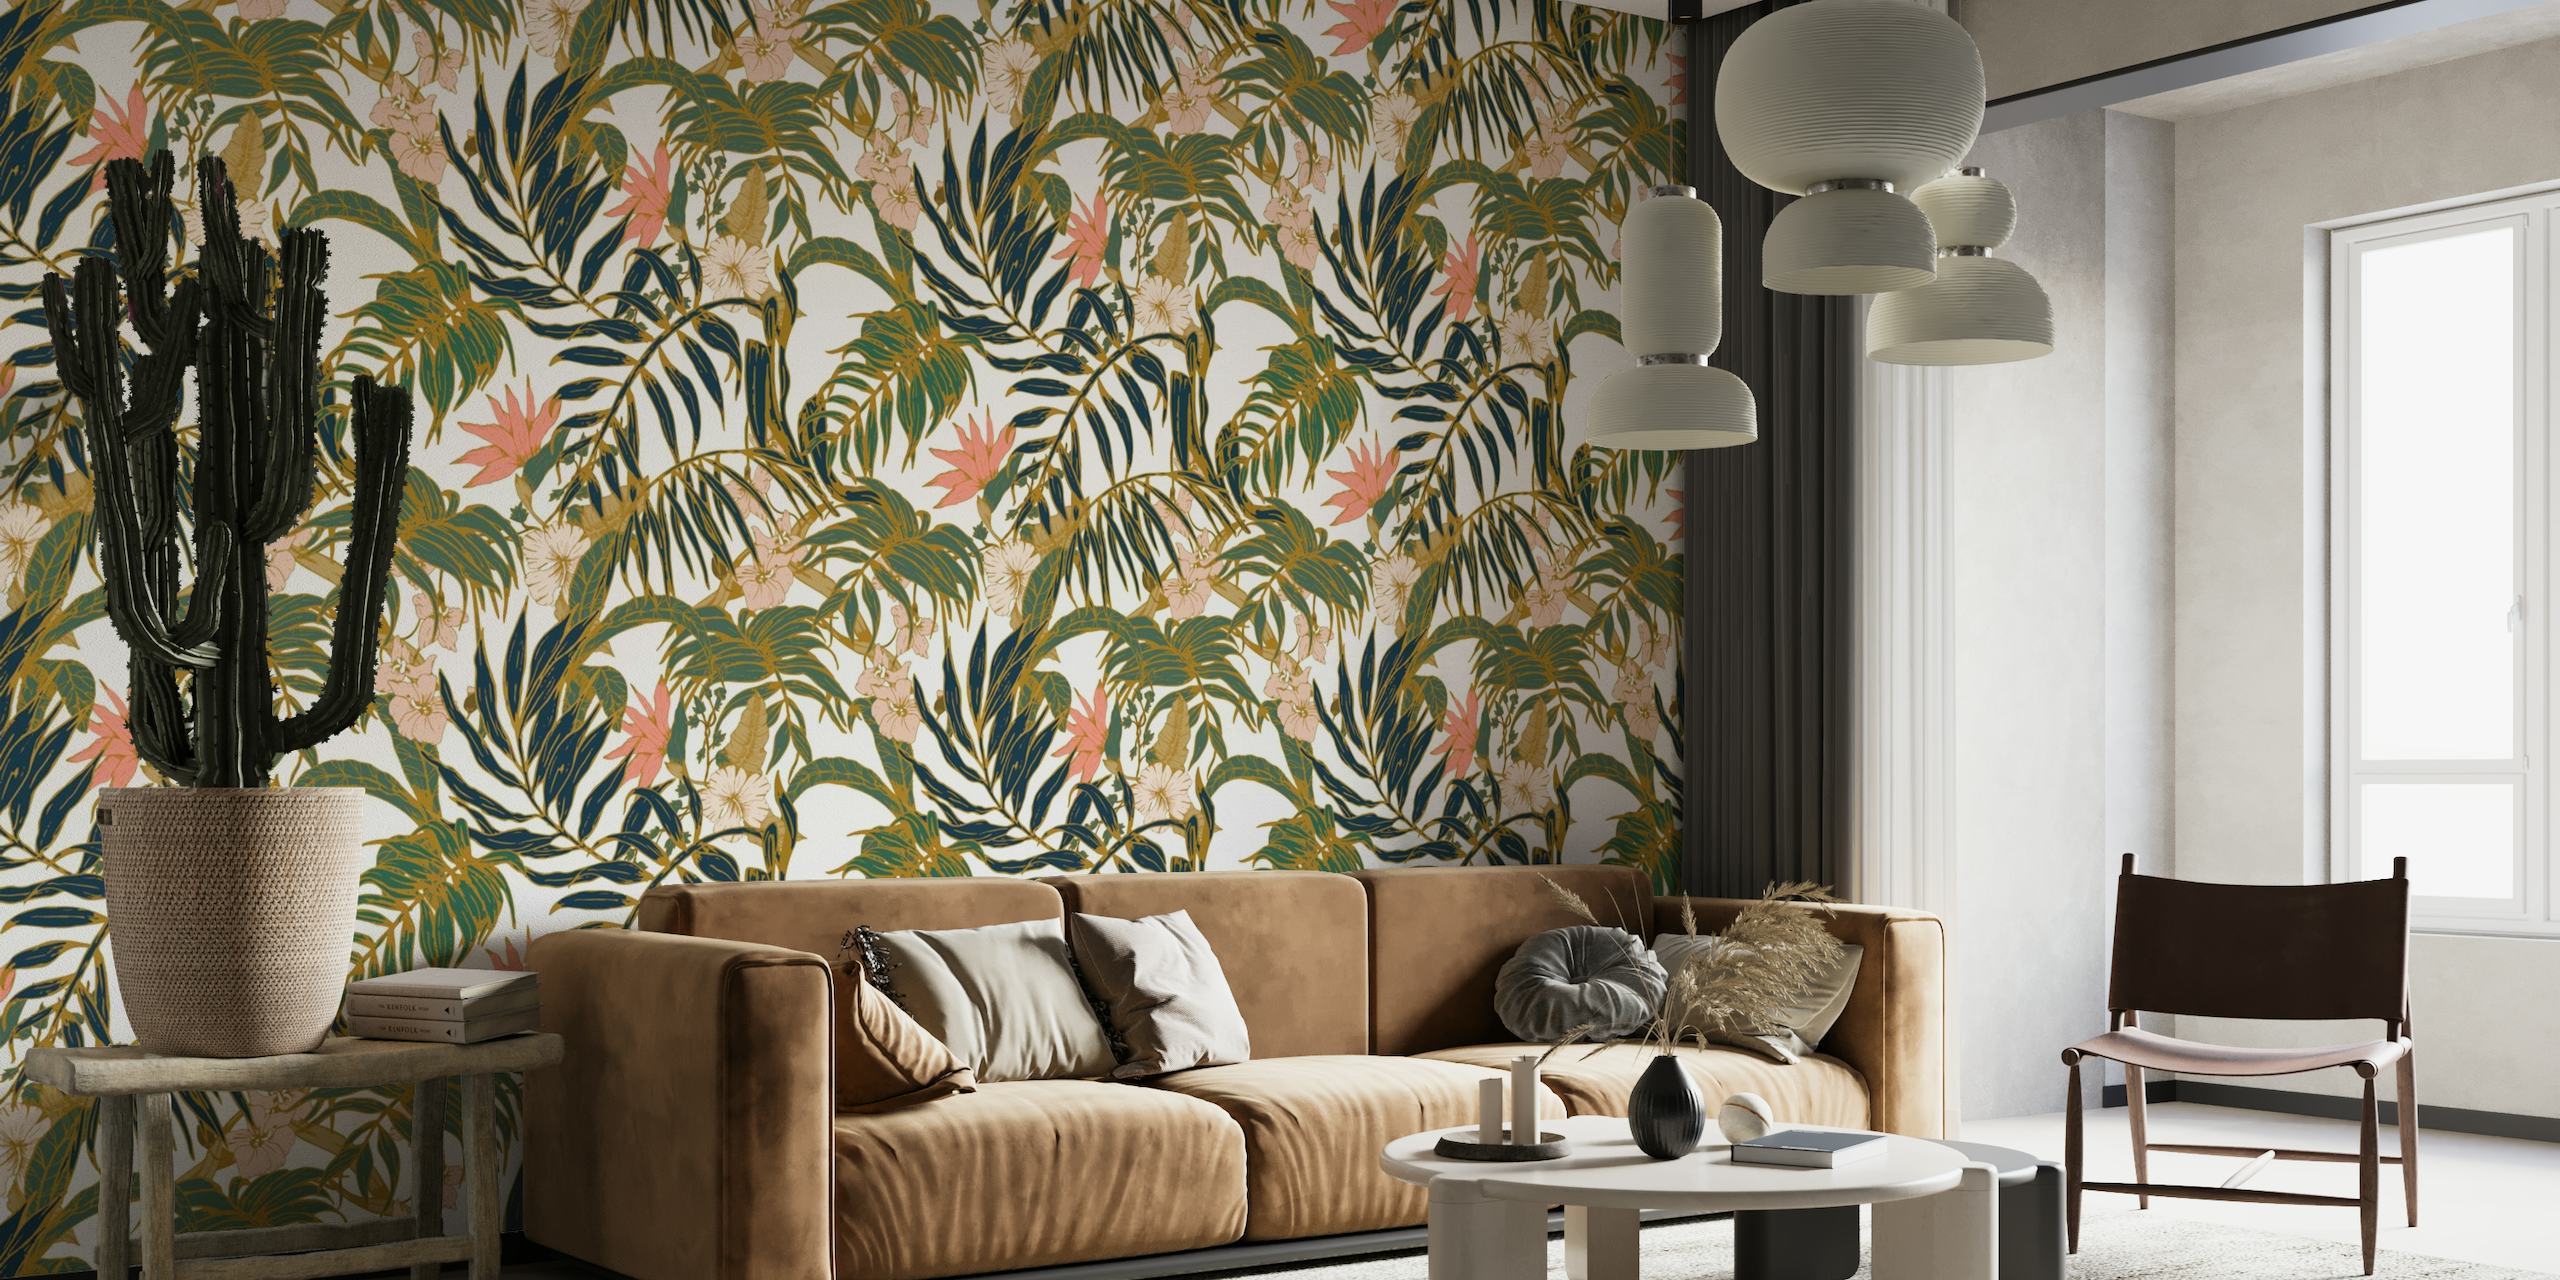 Flowered jungle pattern wallpaper